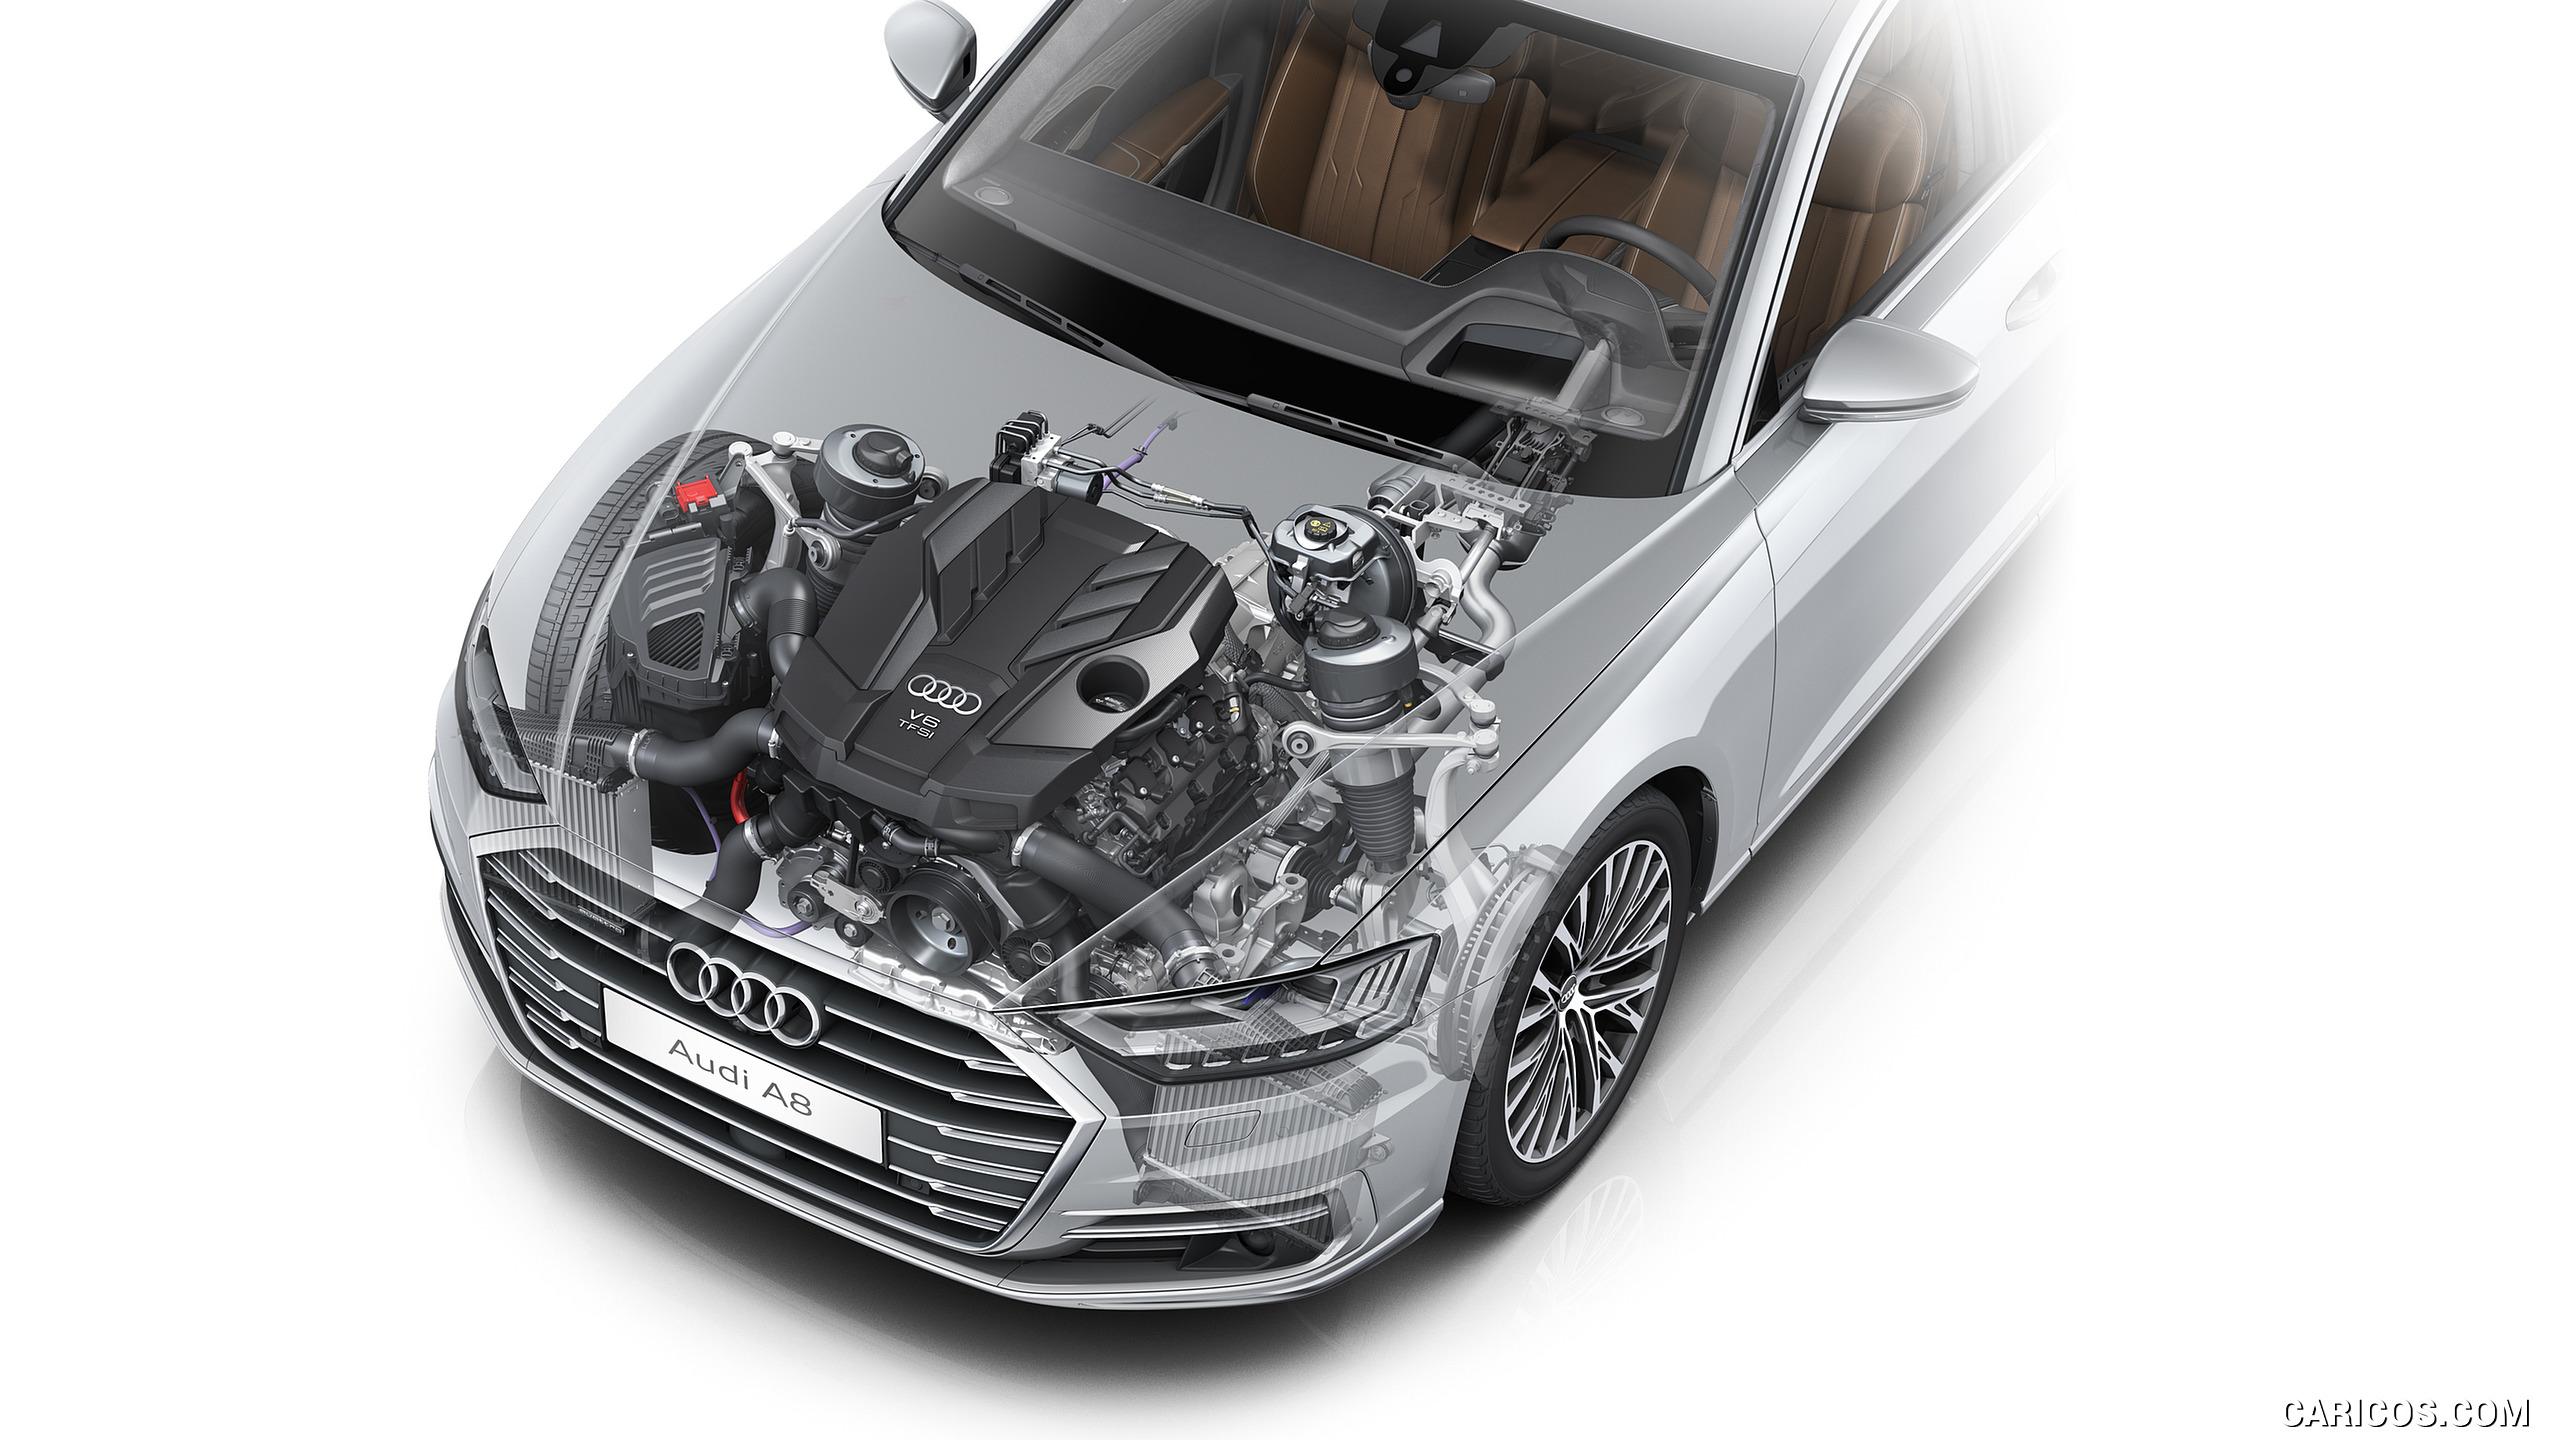 Audi A8 3.0 TFSI Engine. HD Wallpaper